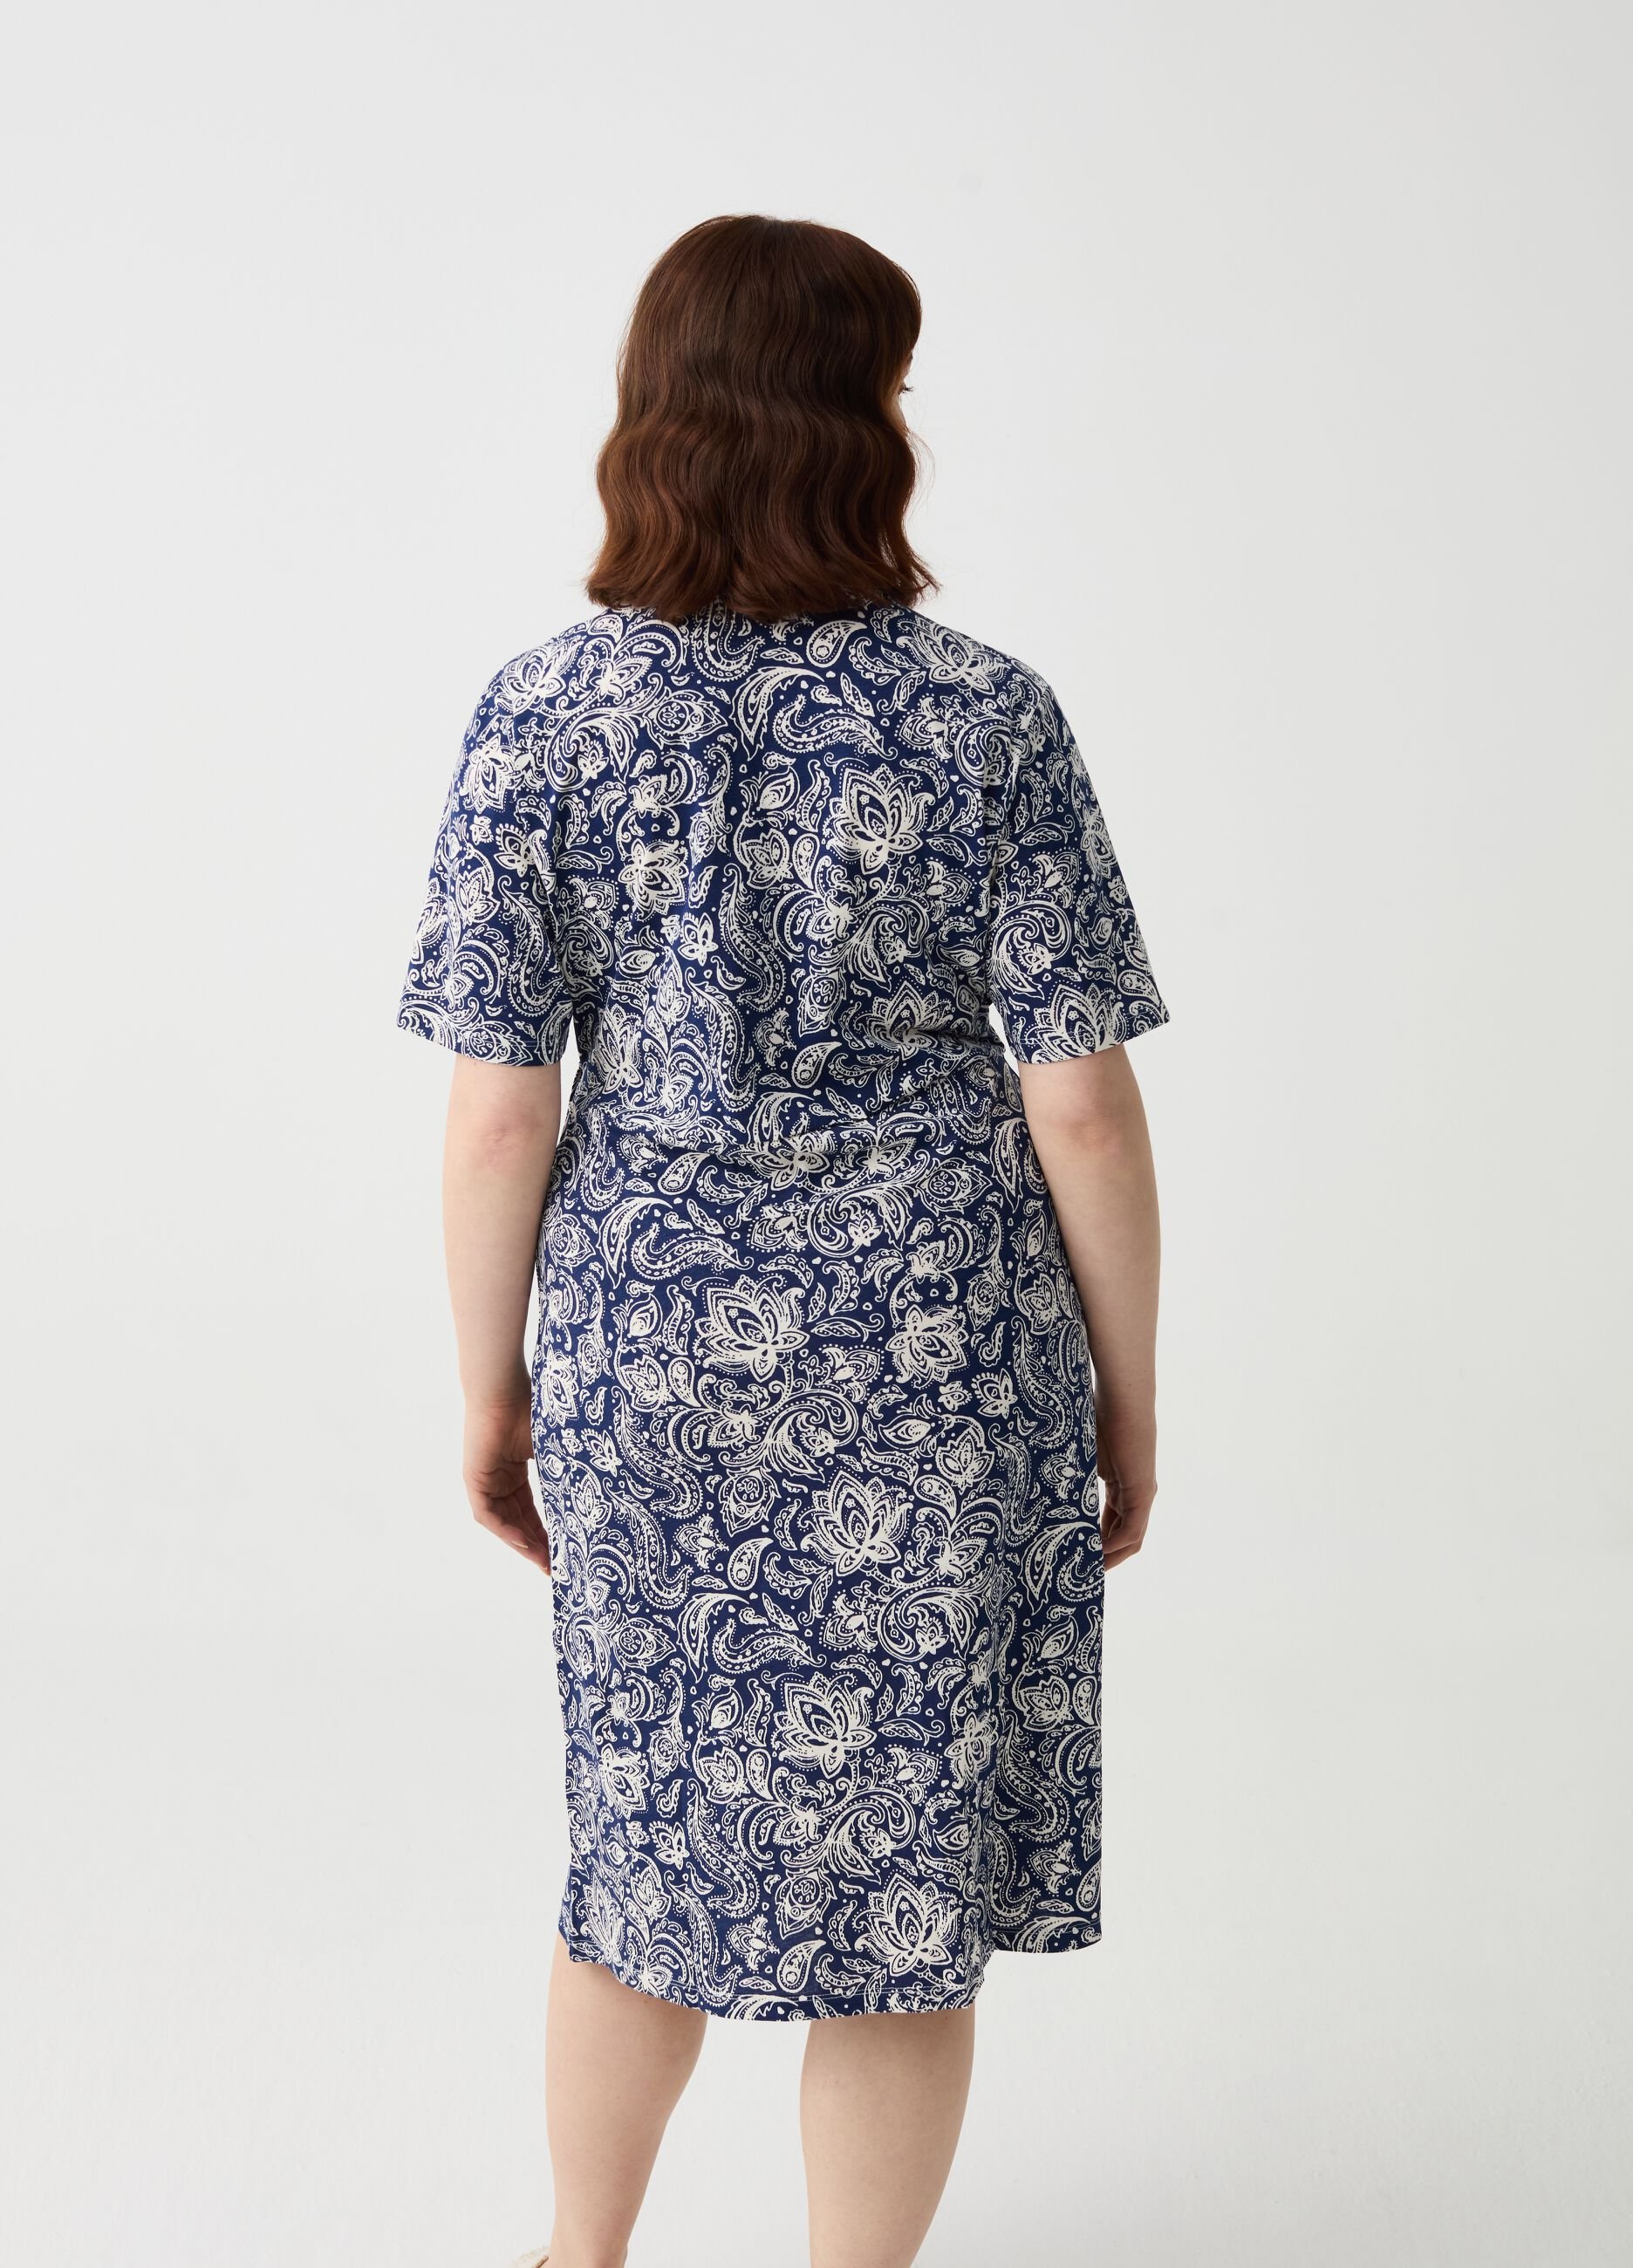 Curvy short wraparound dress with paisley print